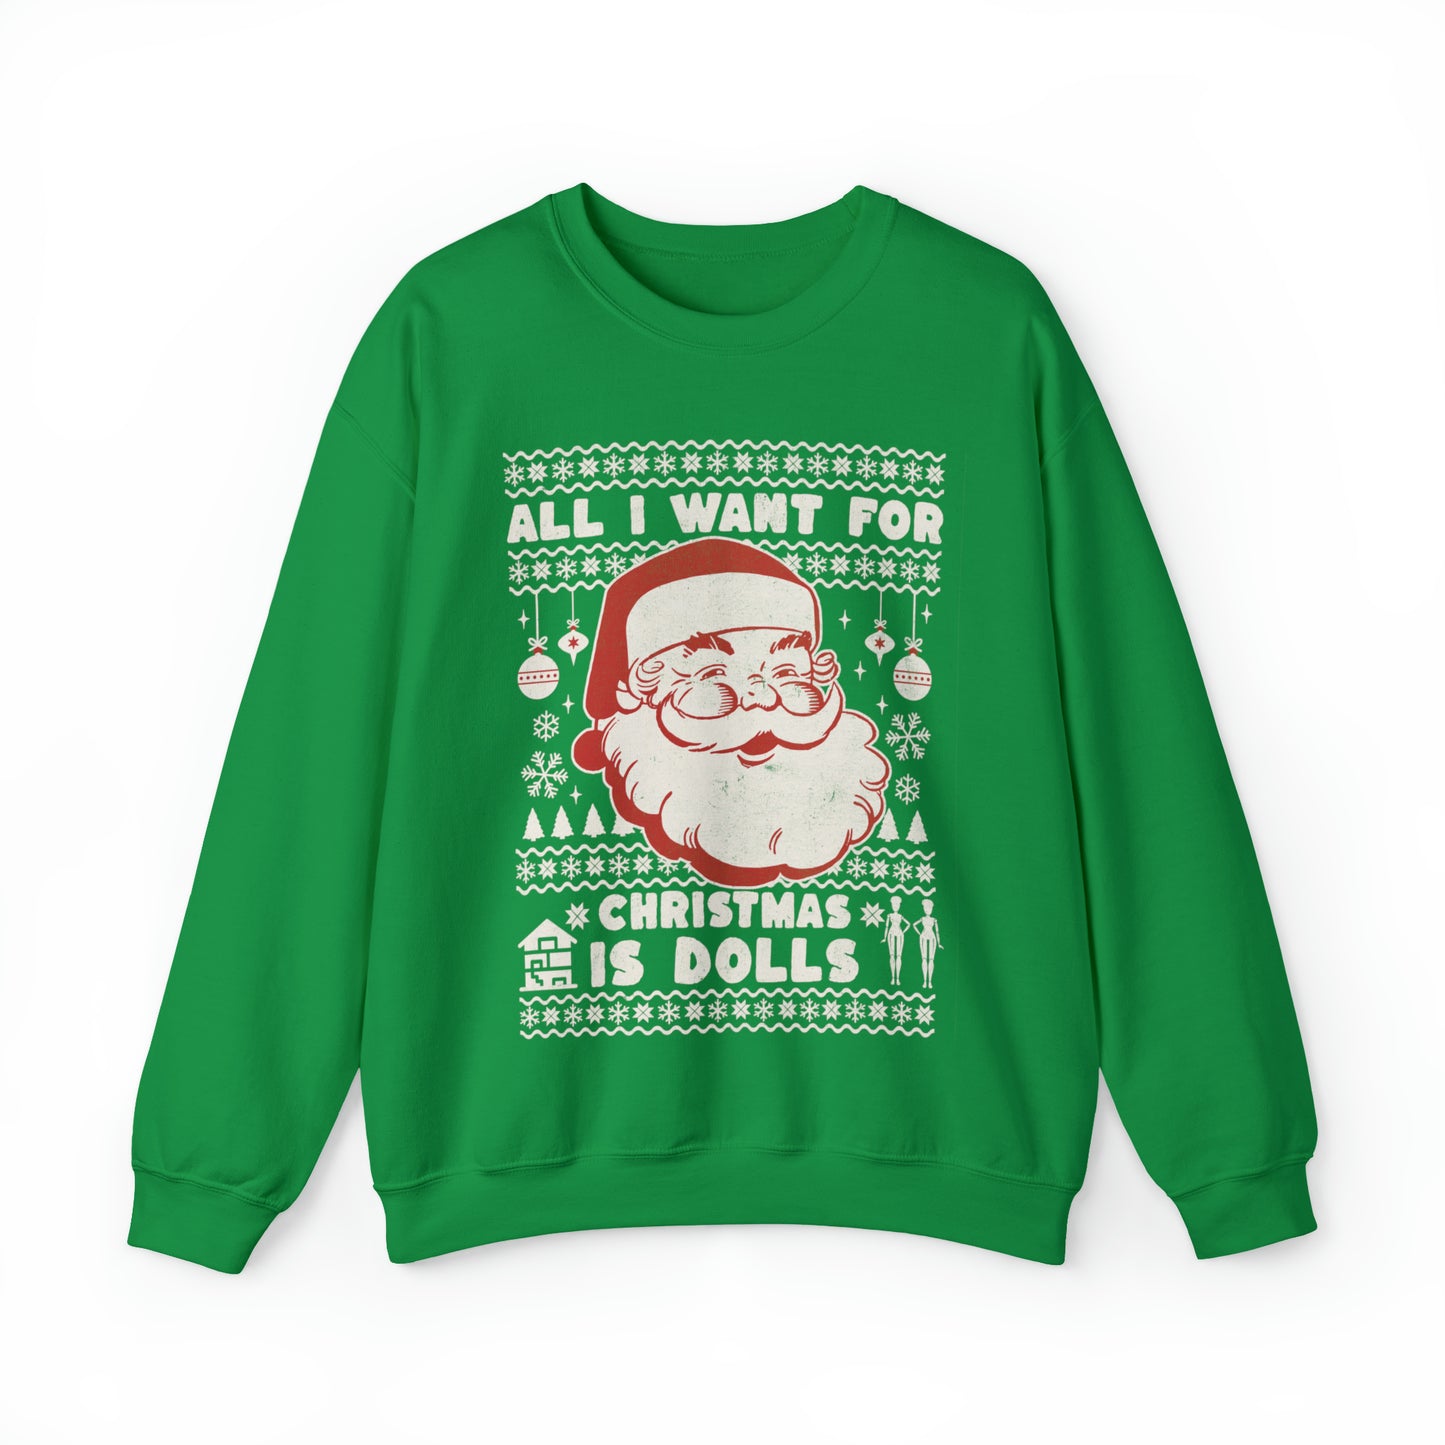 All I Want For Christmas is Dolls Unisex Sweatshirt - Ugly Christmas Sweater